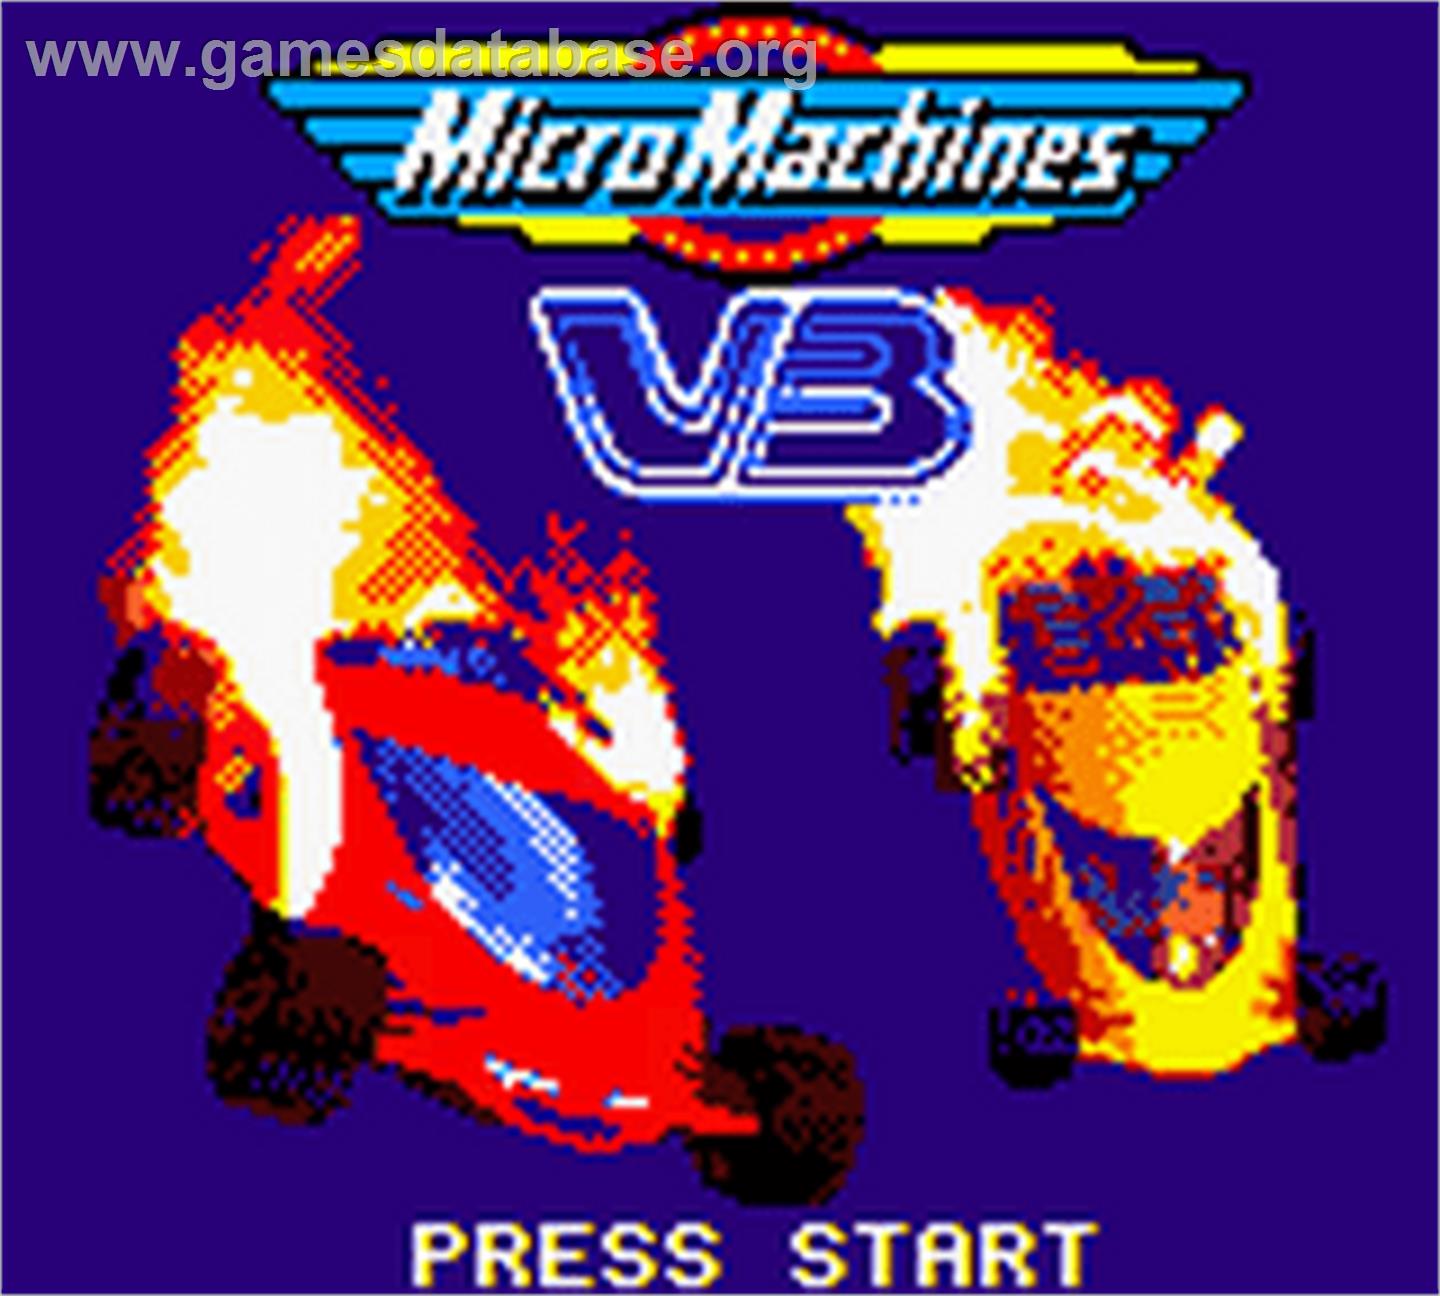 Micro Machines V3 - Nintendo Game Boy Color - Artwork - Title Screen